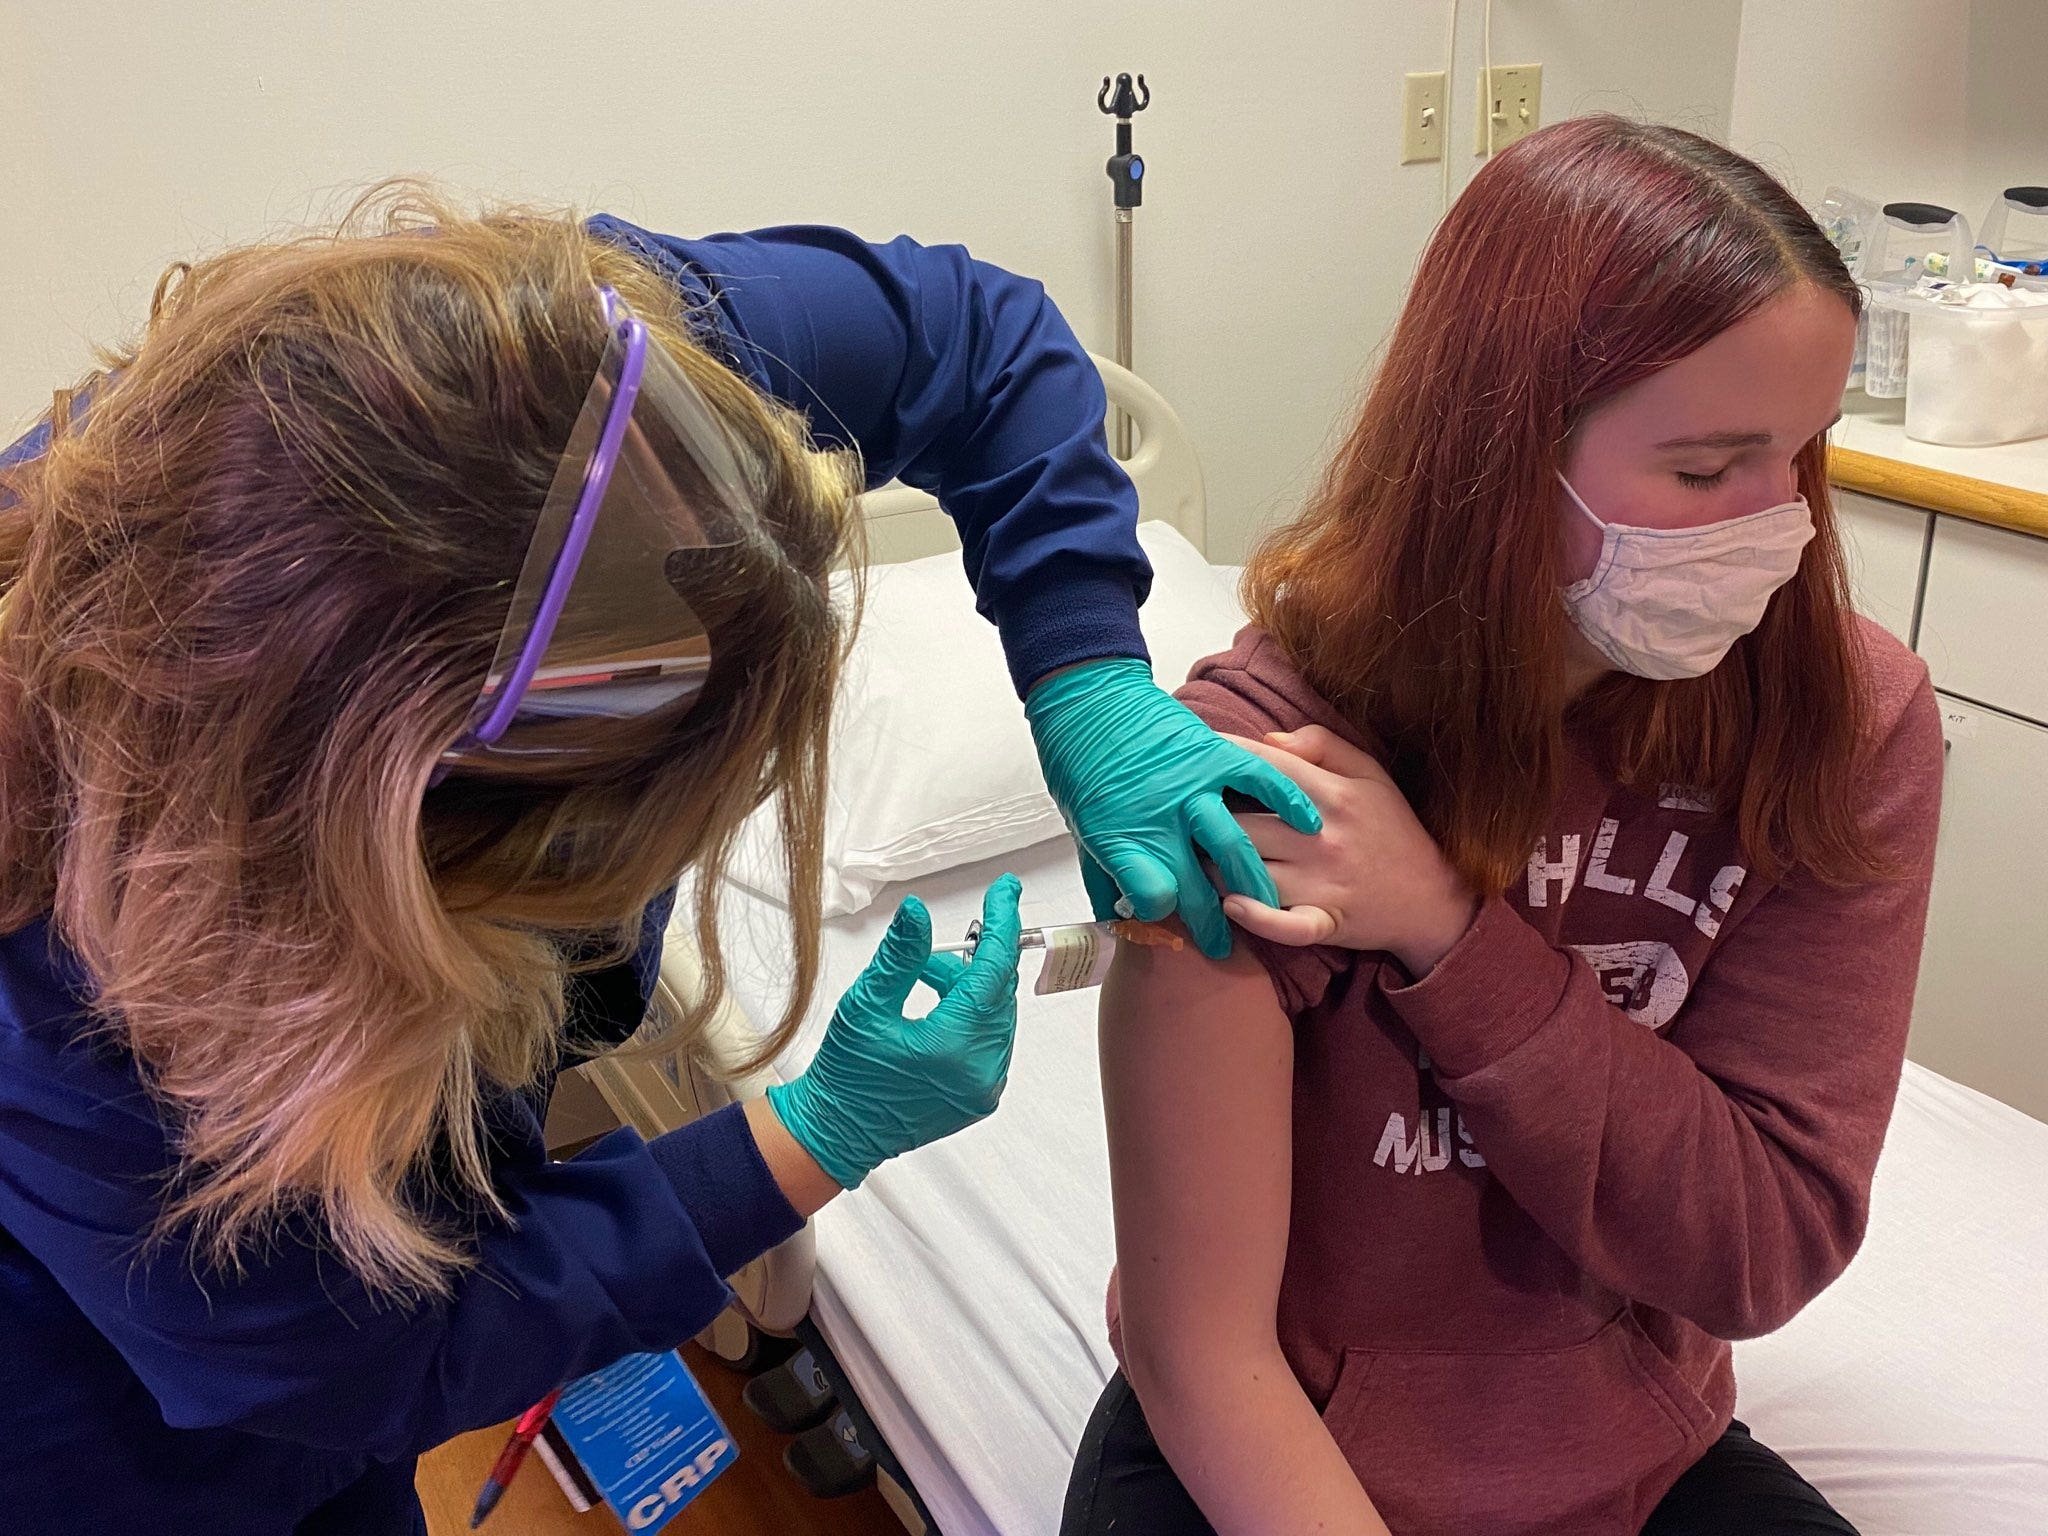 Pfizer coronavirus vaccine news likely won’t change timeline, expert says